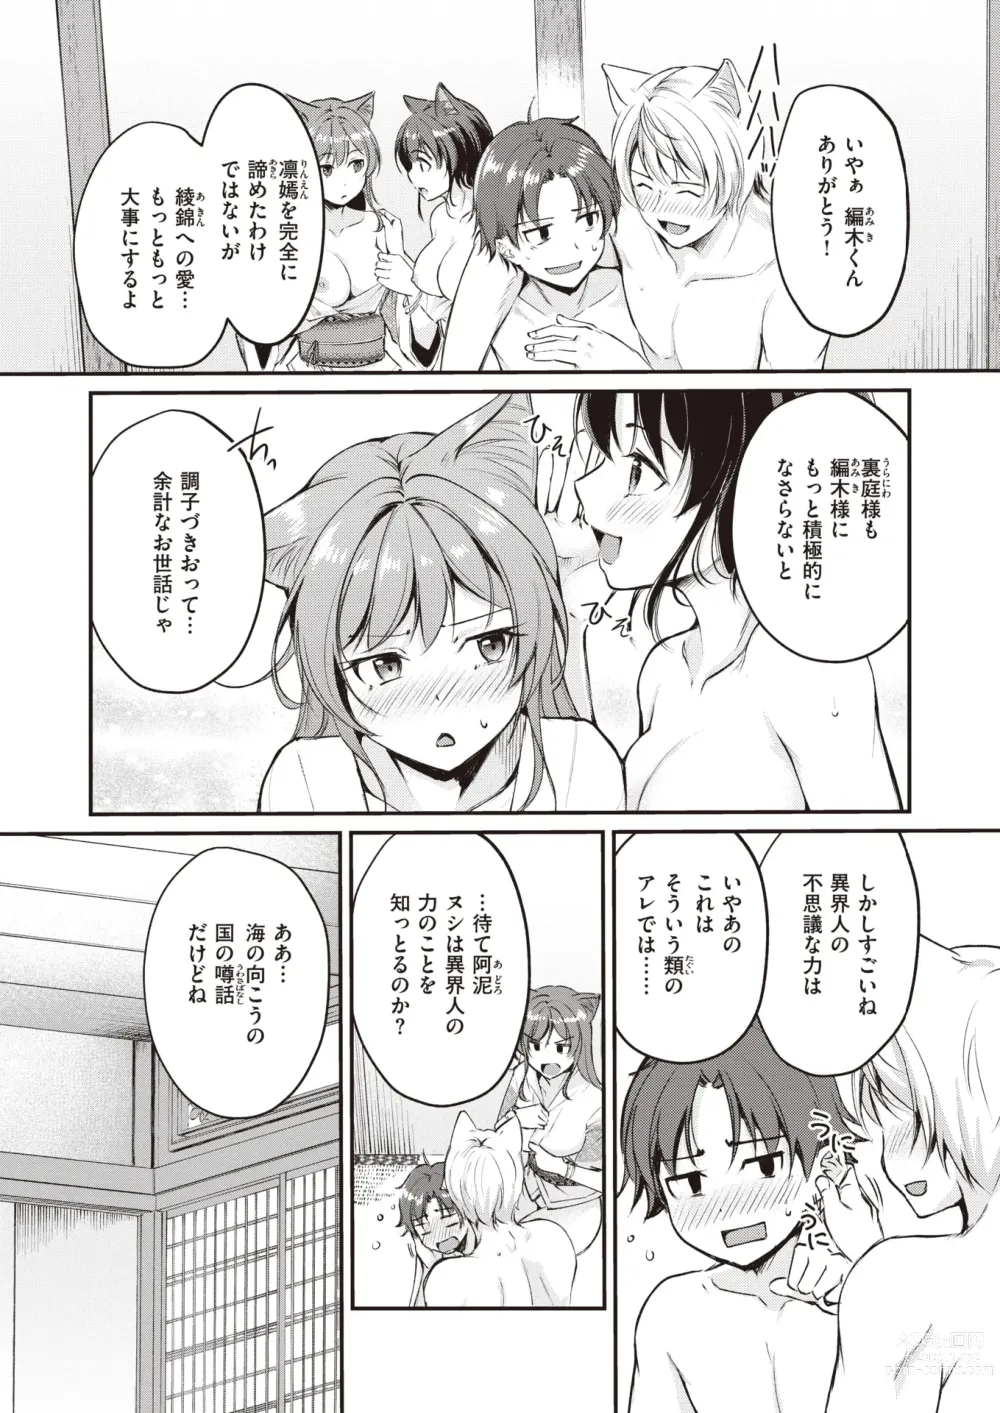 Page 50 of manga Isekai Rakuten Vol. 23